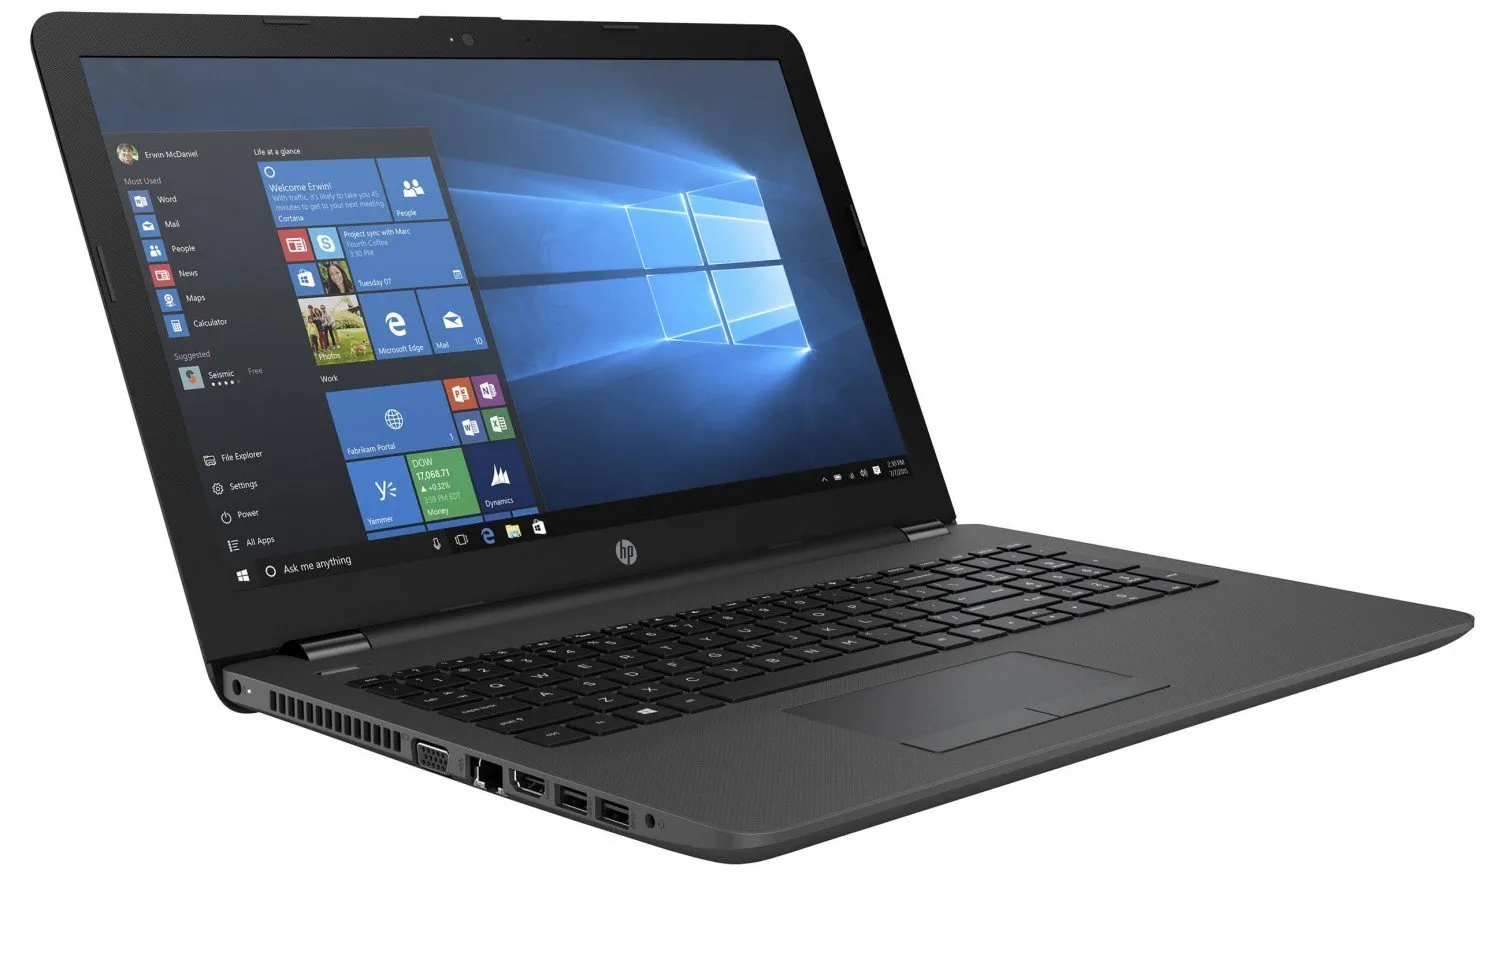 Ноутбук HP 250 G6 /Celeron 3060/4 GB DDR3/ 500GB HDD /15.6" HD LED/Intel HD Graphics 5500/ DVD / RUS#1